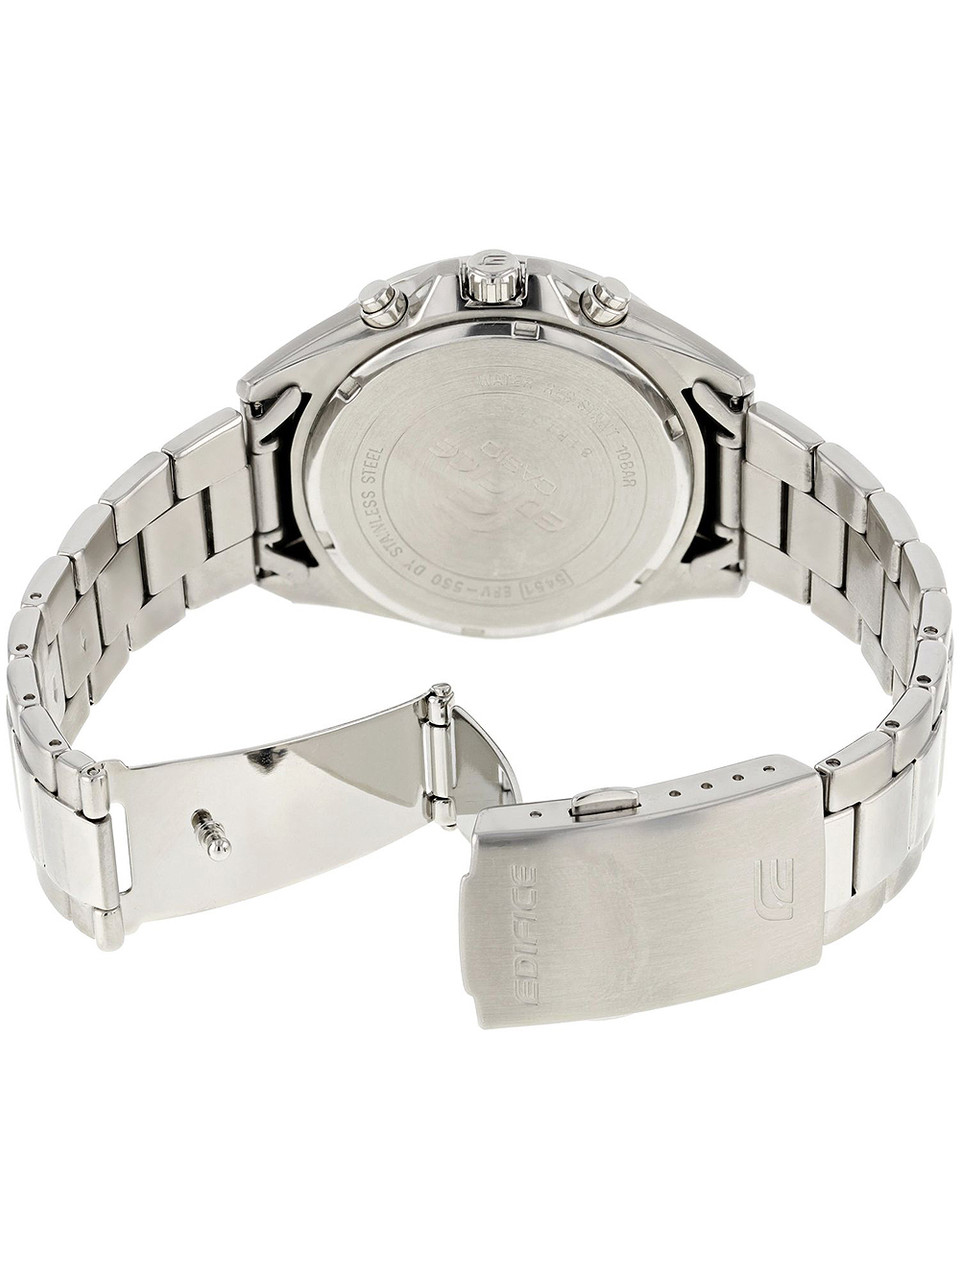 Casio EFV-560D-1AVUEF Edifice chronograph 45mm 10ATM - owlica | Genuine  Watches